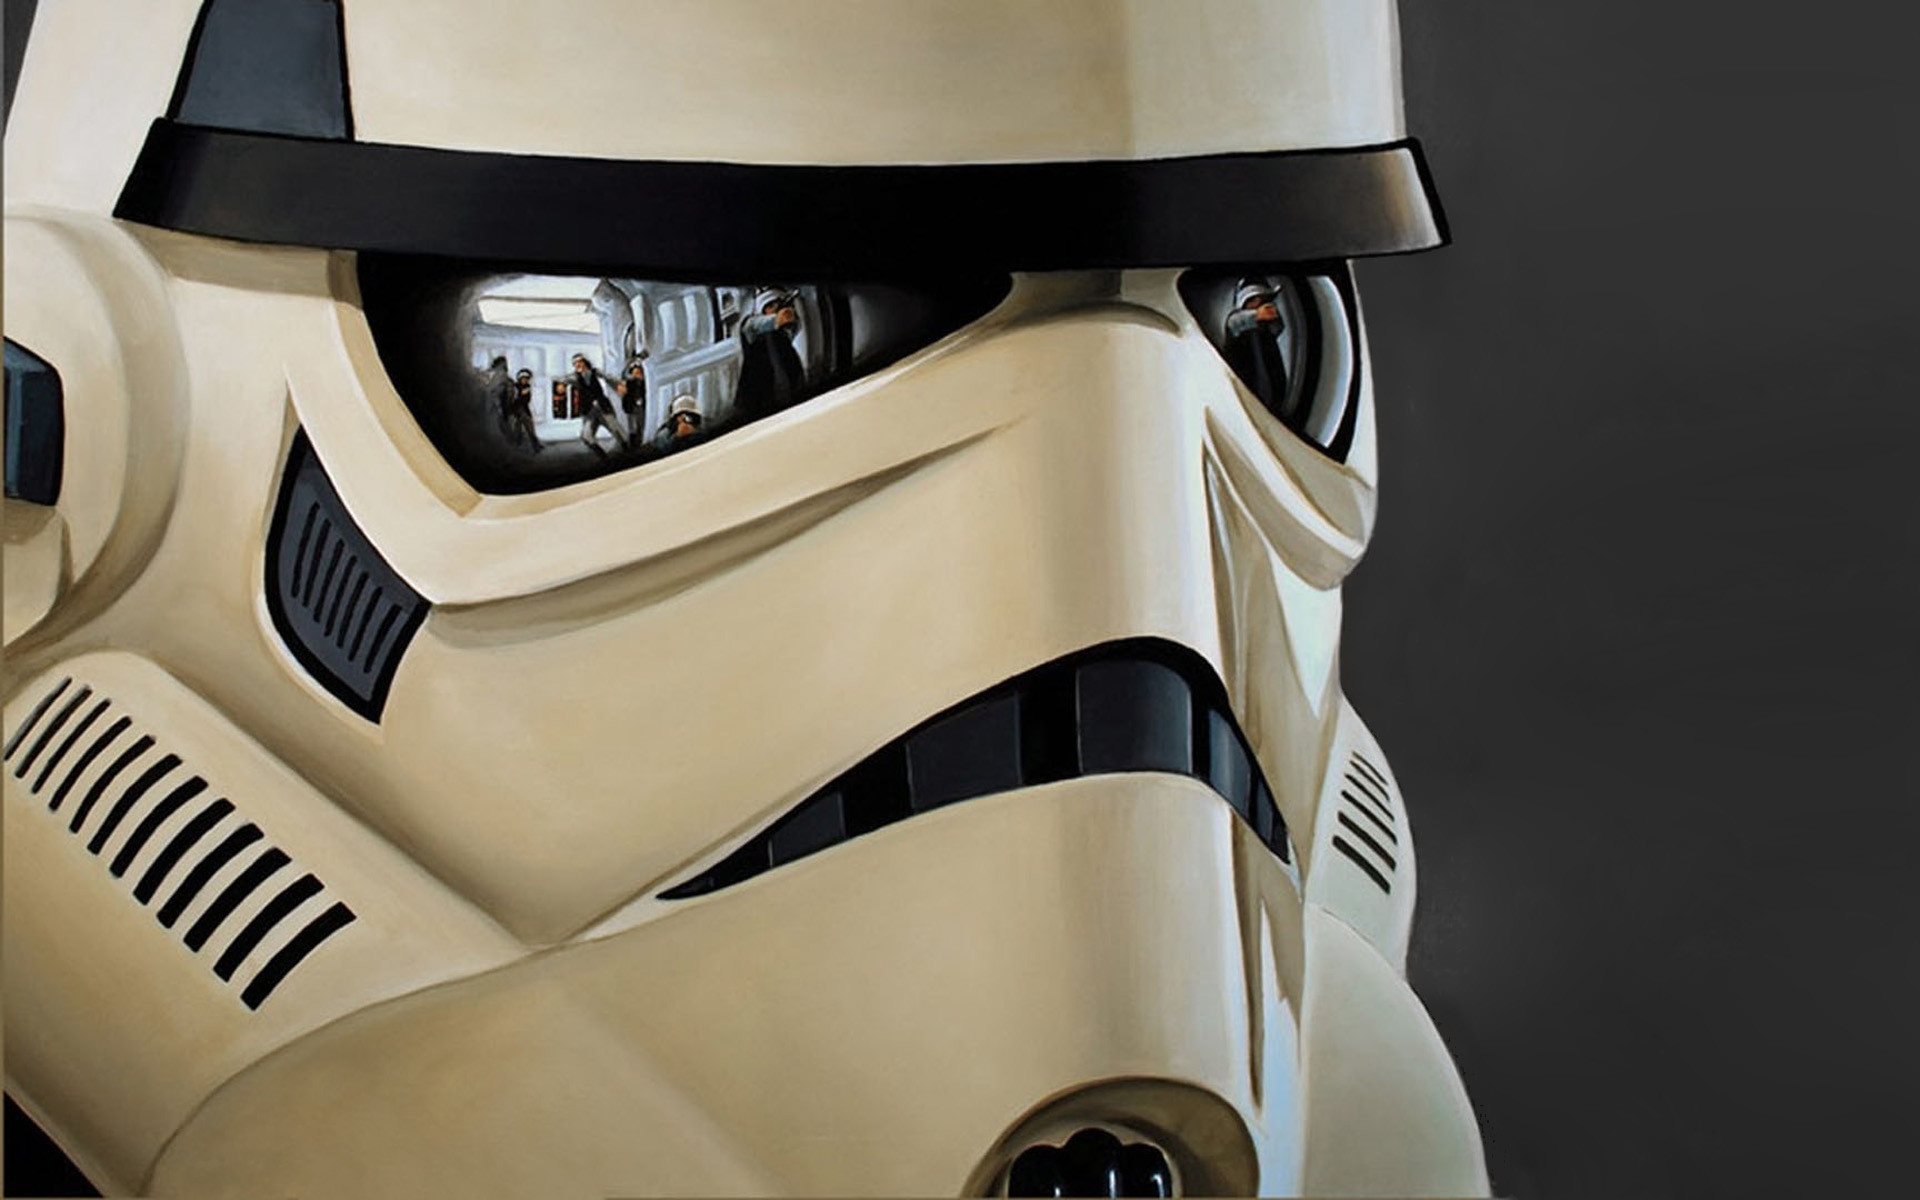 1920x1200 Star Wars Stormtrooper Helmet wallpapers and stock photos